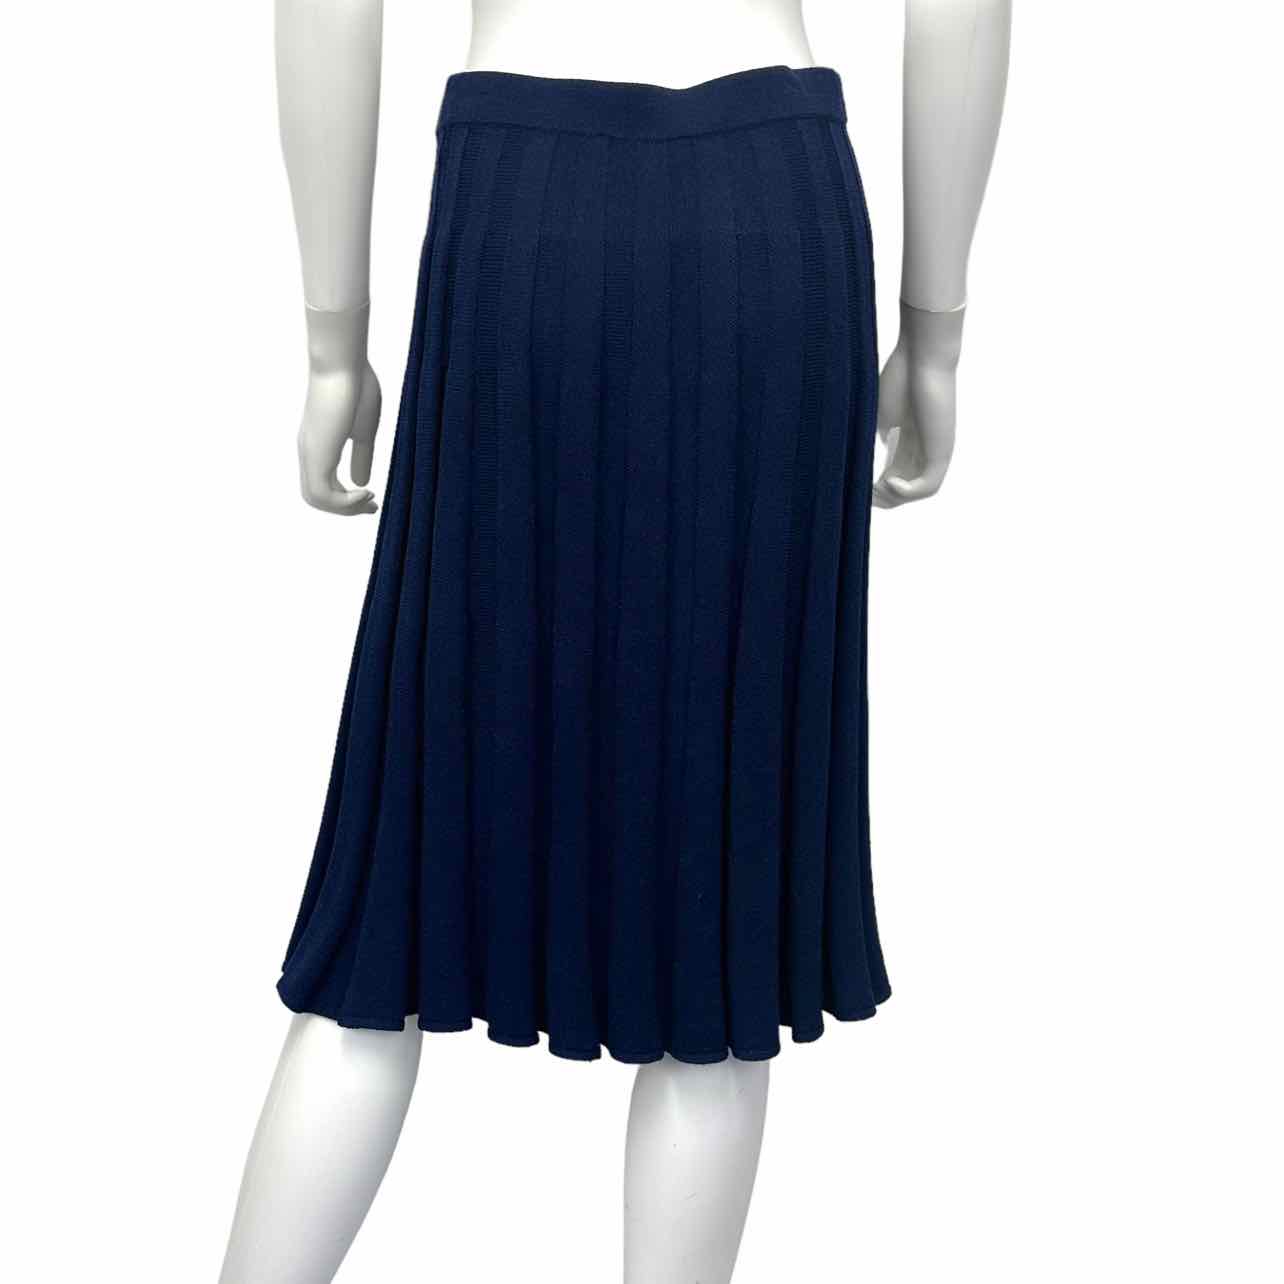 St. John Navy Knit Skirt Size 6